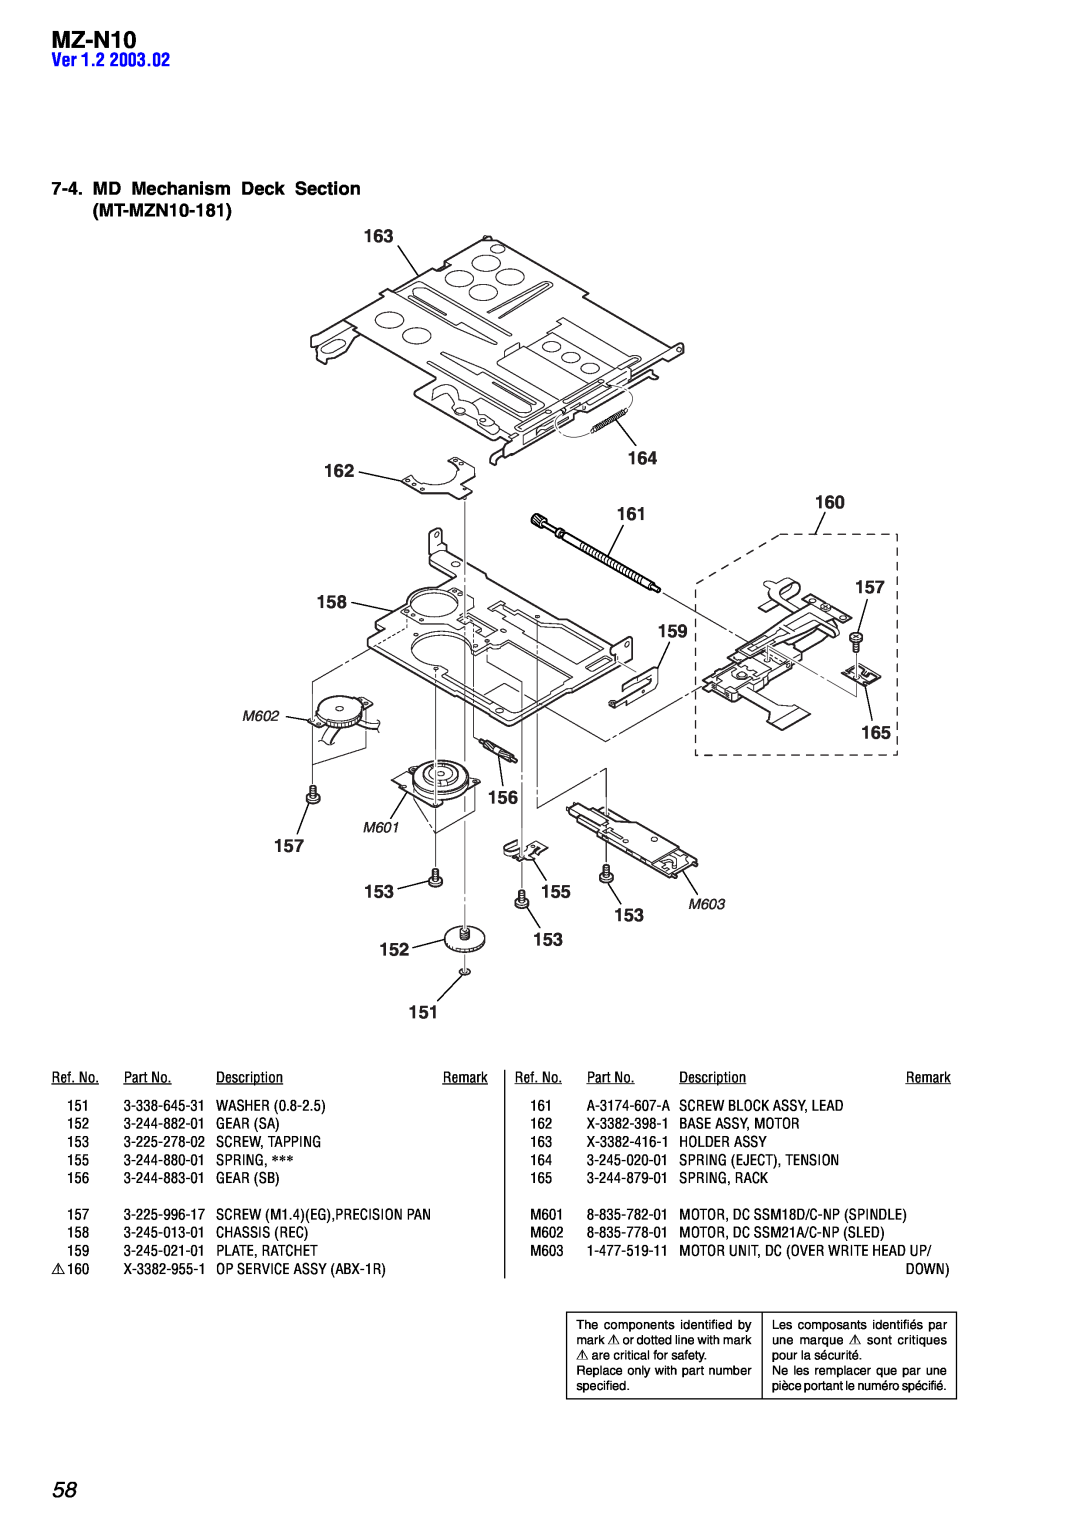 Sony MZ-N10 service manual Ver, MD Mechanism Deck Section MT-MZN10-181, 157, 155 